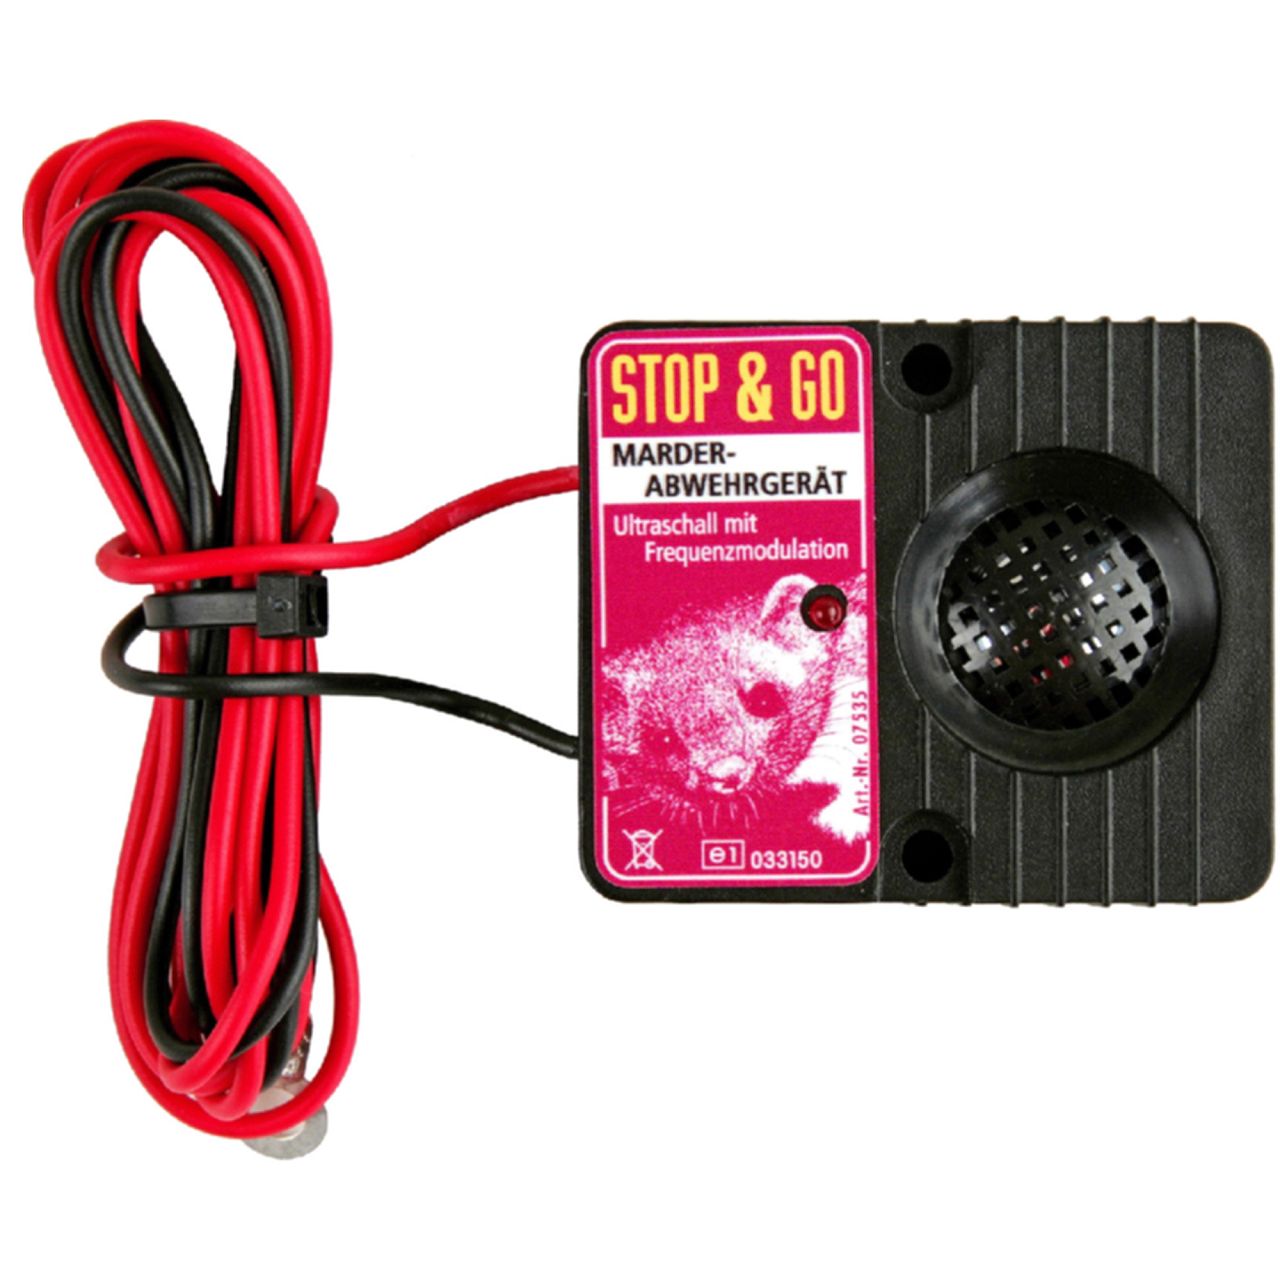 Stop & Go Ultraschall Marder-Abwehrgerät (07533) online kaufen